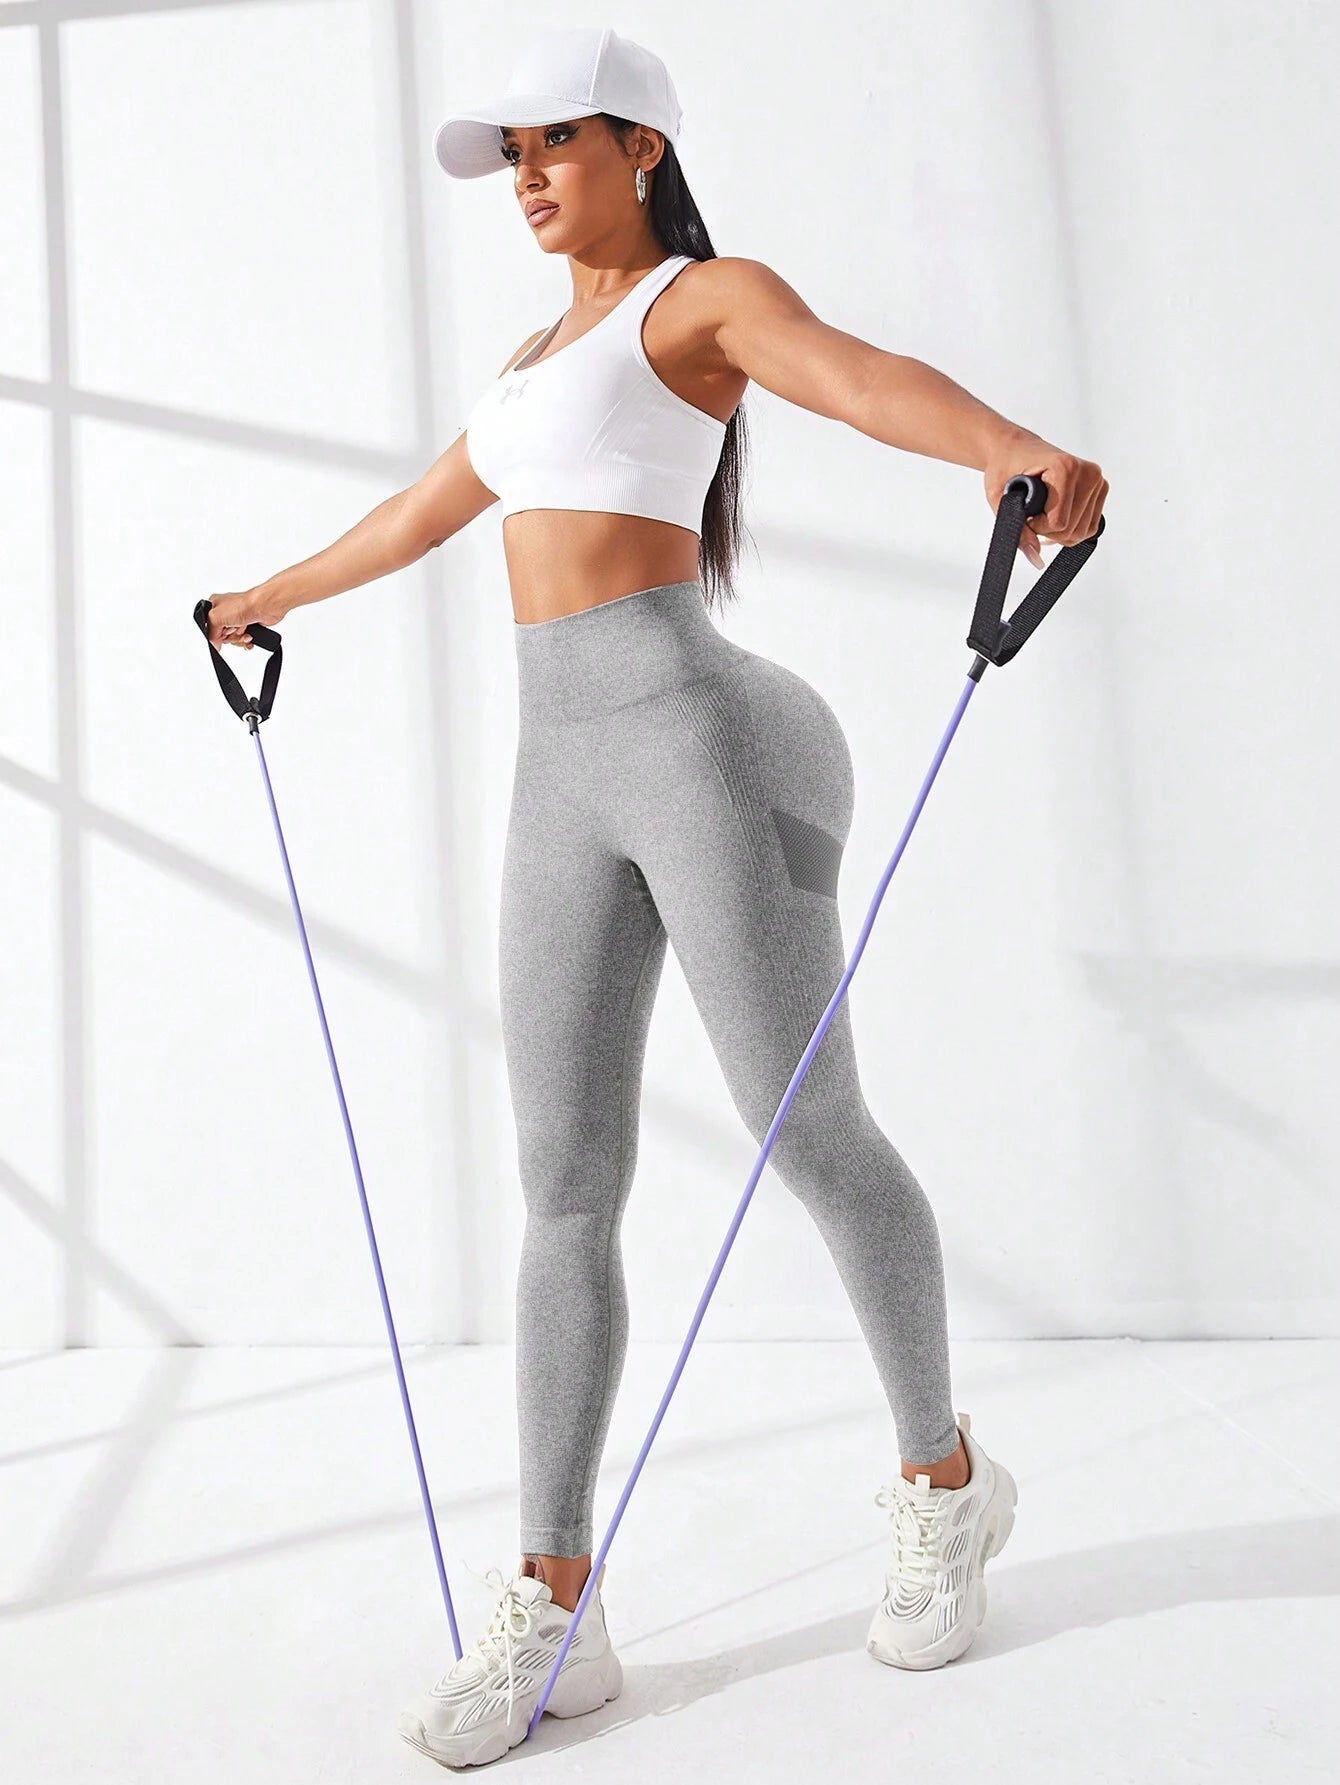 Yoga Basic Yoga Leggings Seamless High Stretch Tummy Control Scrunch Butt Active Tights with Wideband Waist